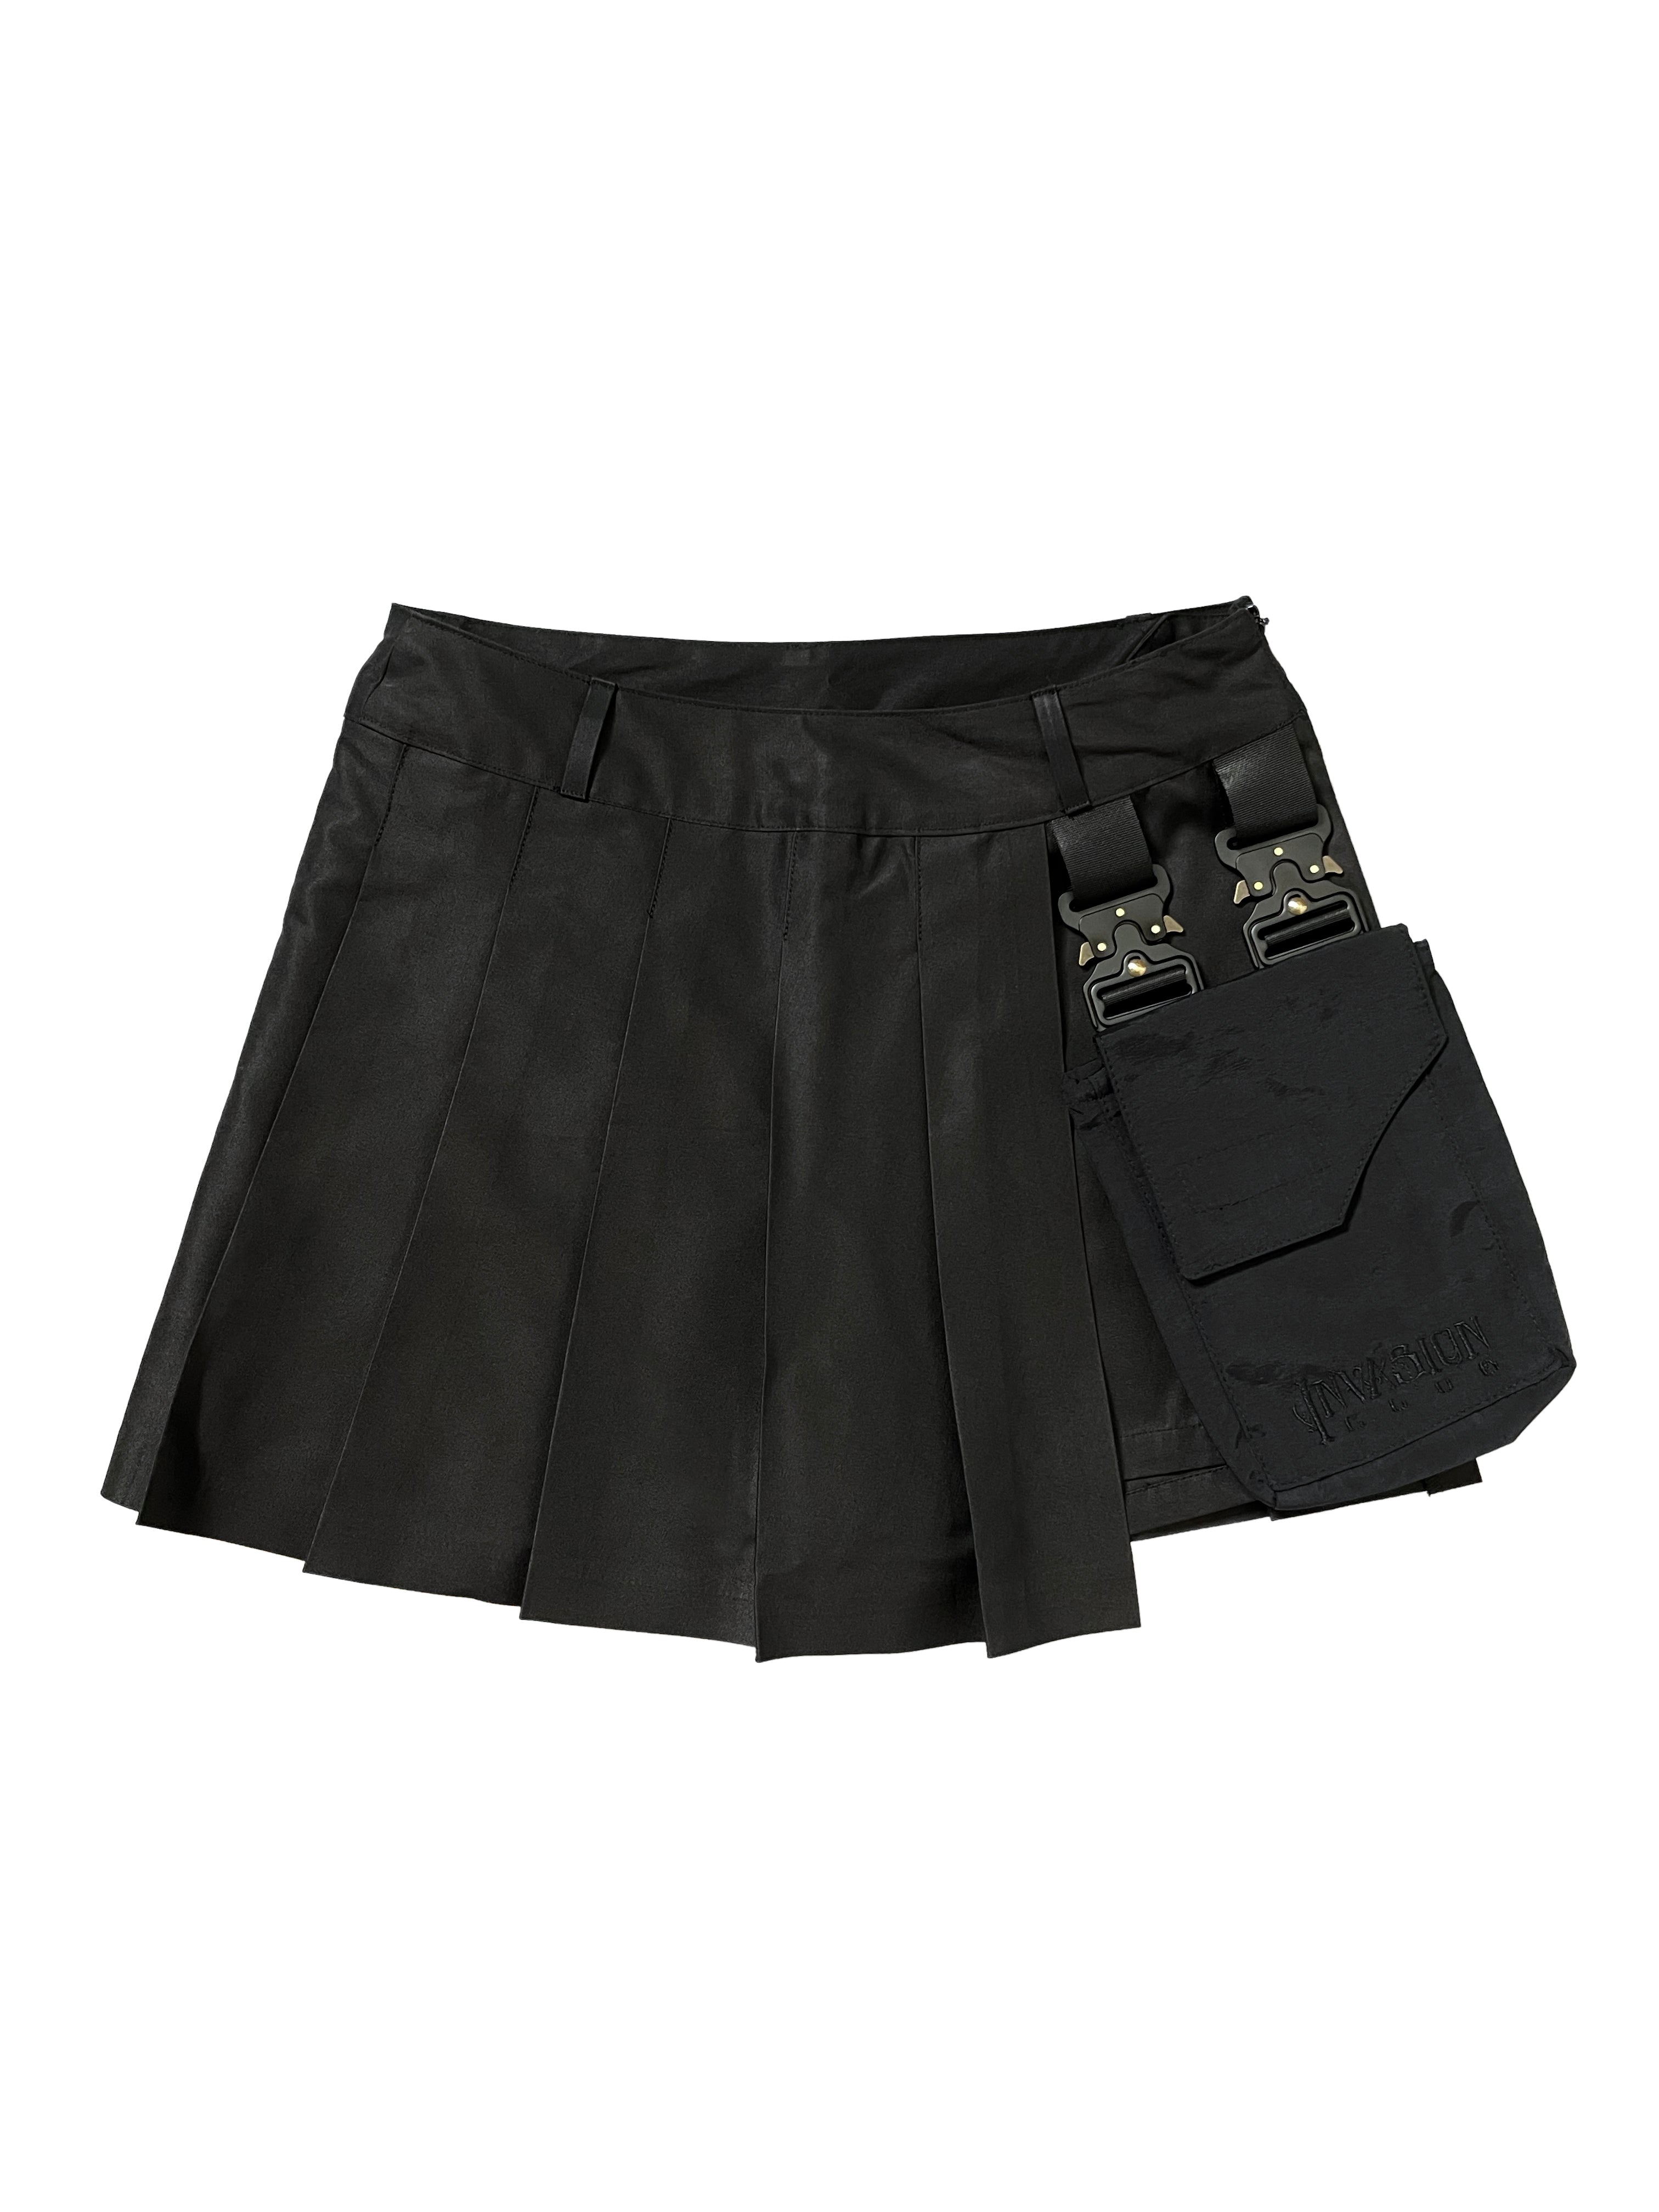 Inset Shorts Under Skirt